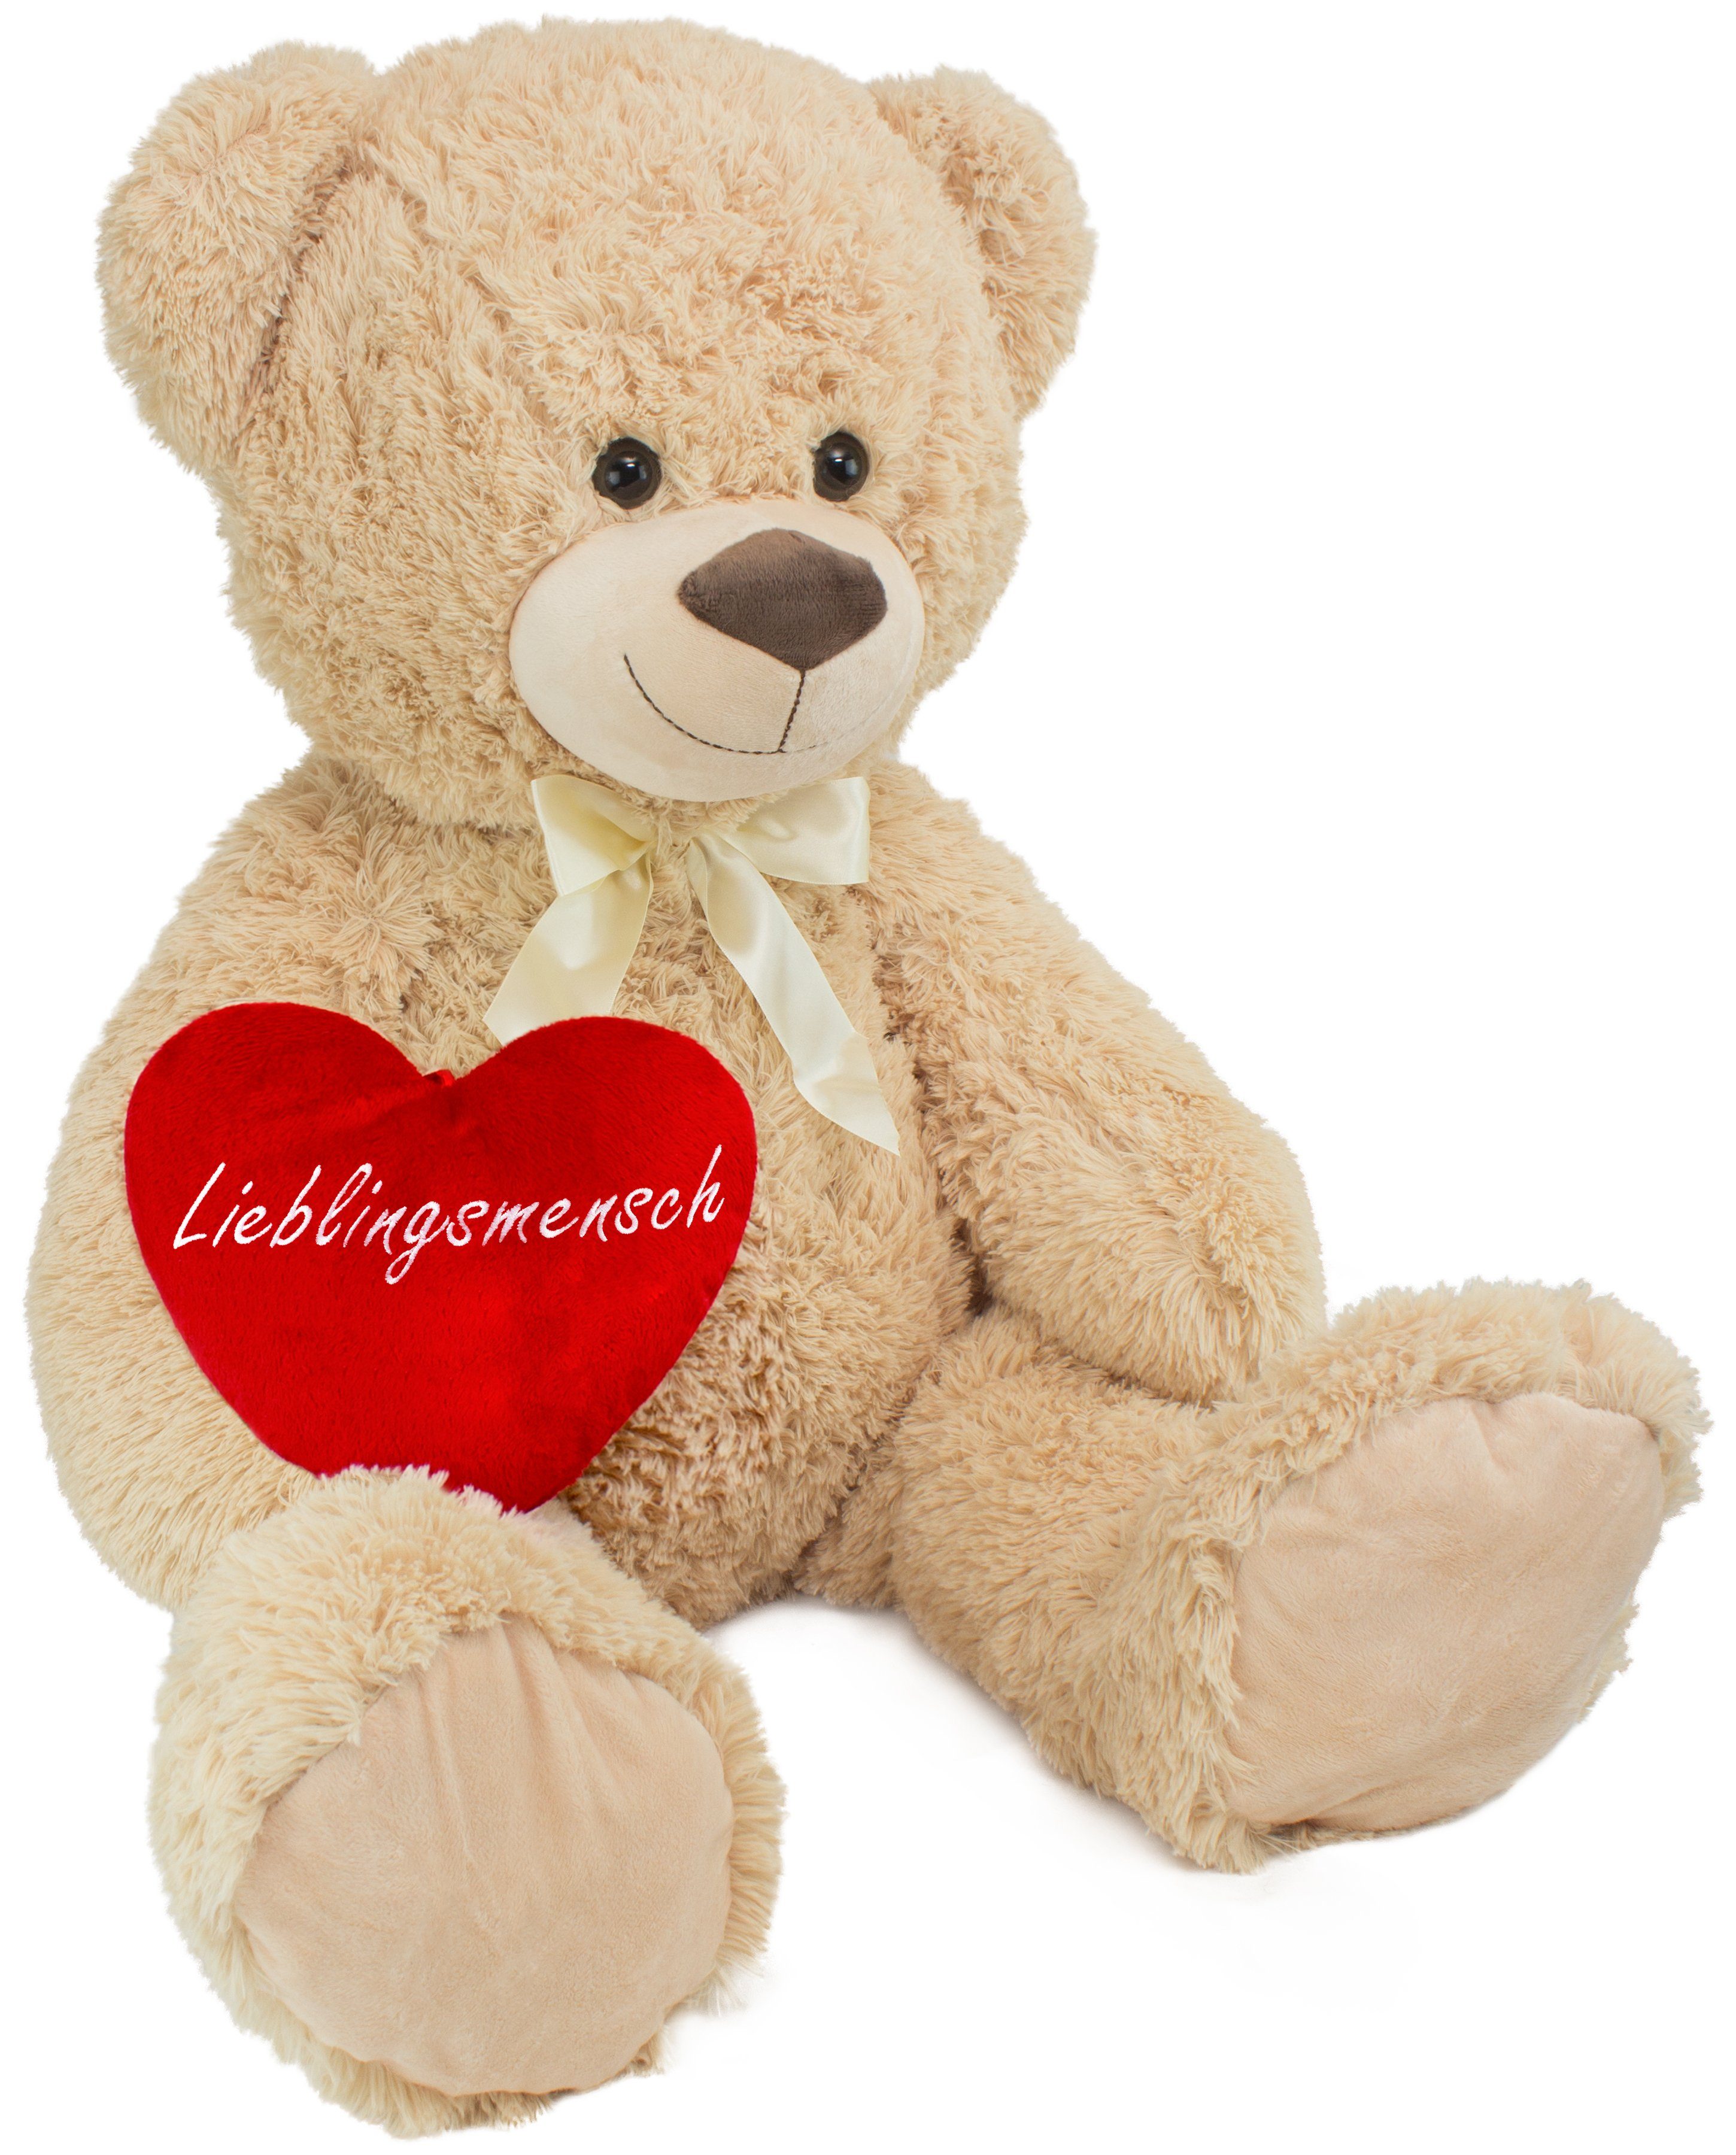 BRUBAKER Kuscheltier XXL Teddybär 100 cm groß mit Herz Lieblingsmensch (1-St), großer Teddy Bär, Stofftier Plüschtier